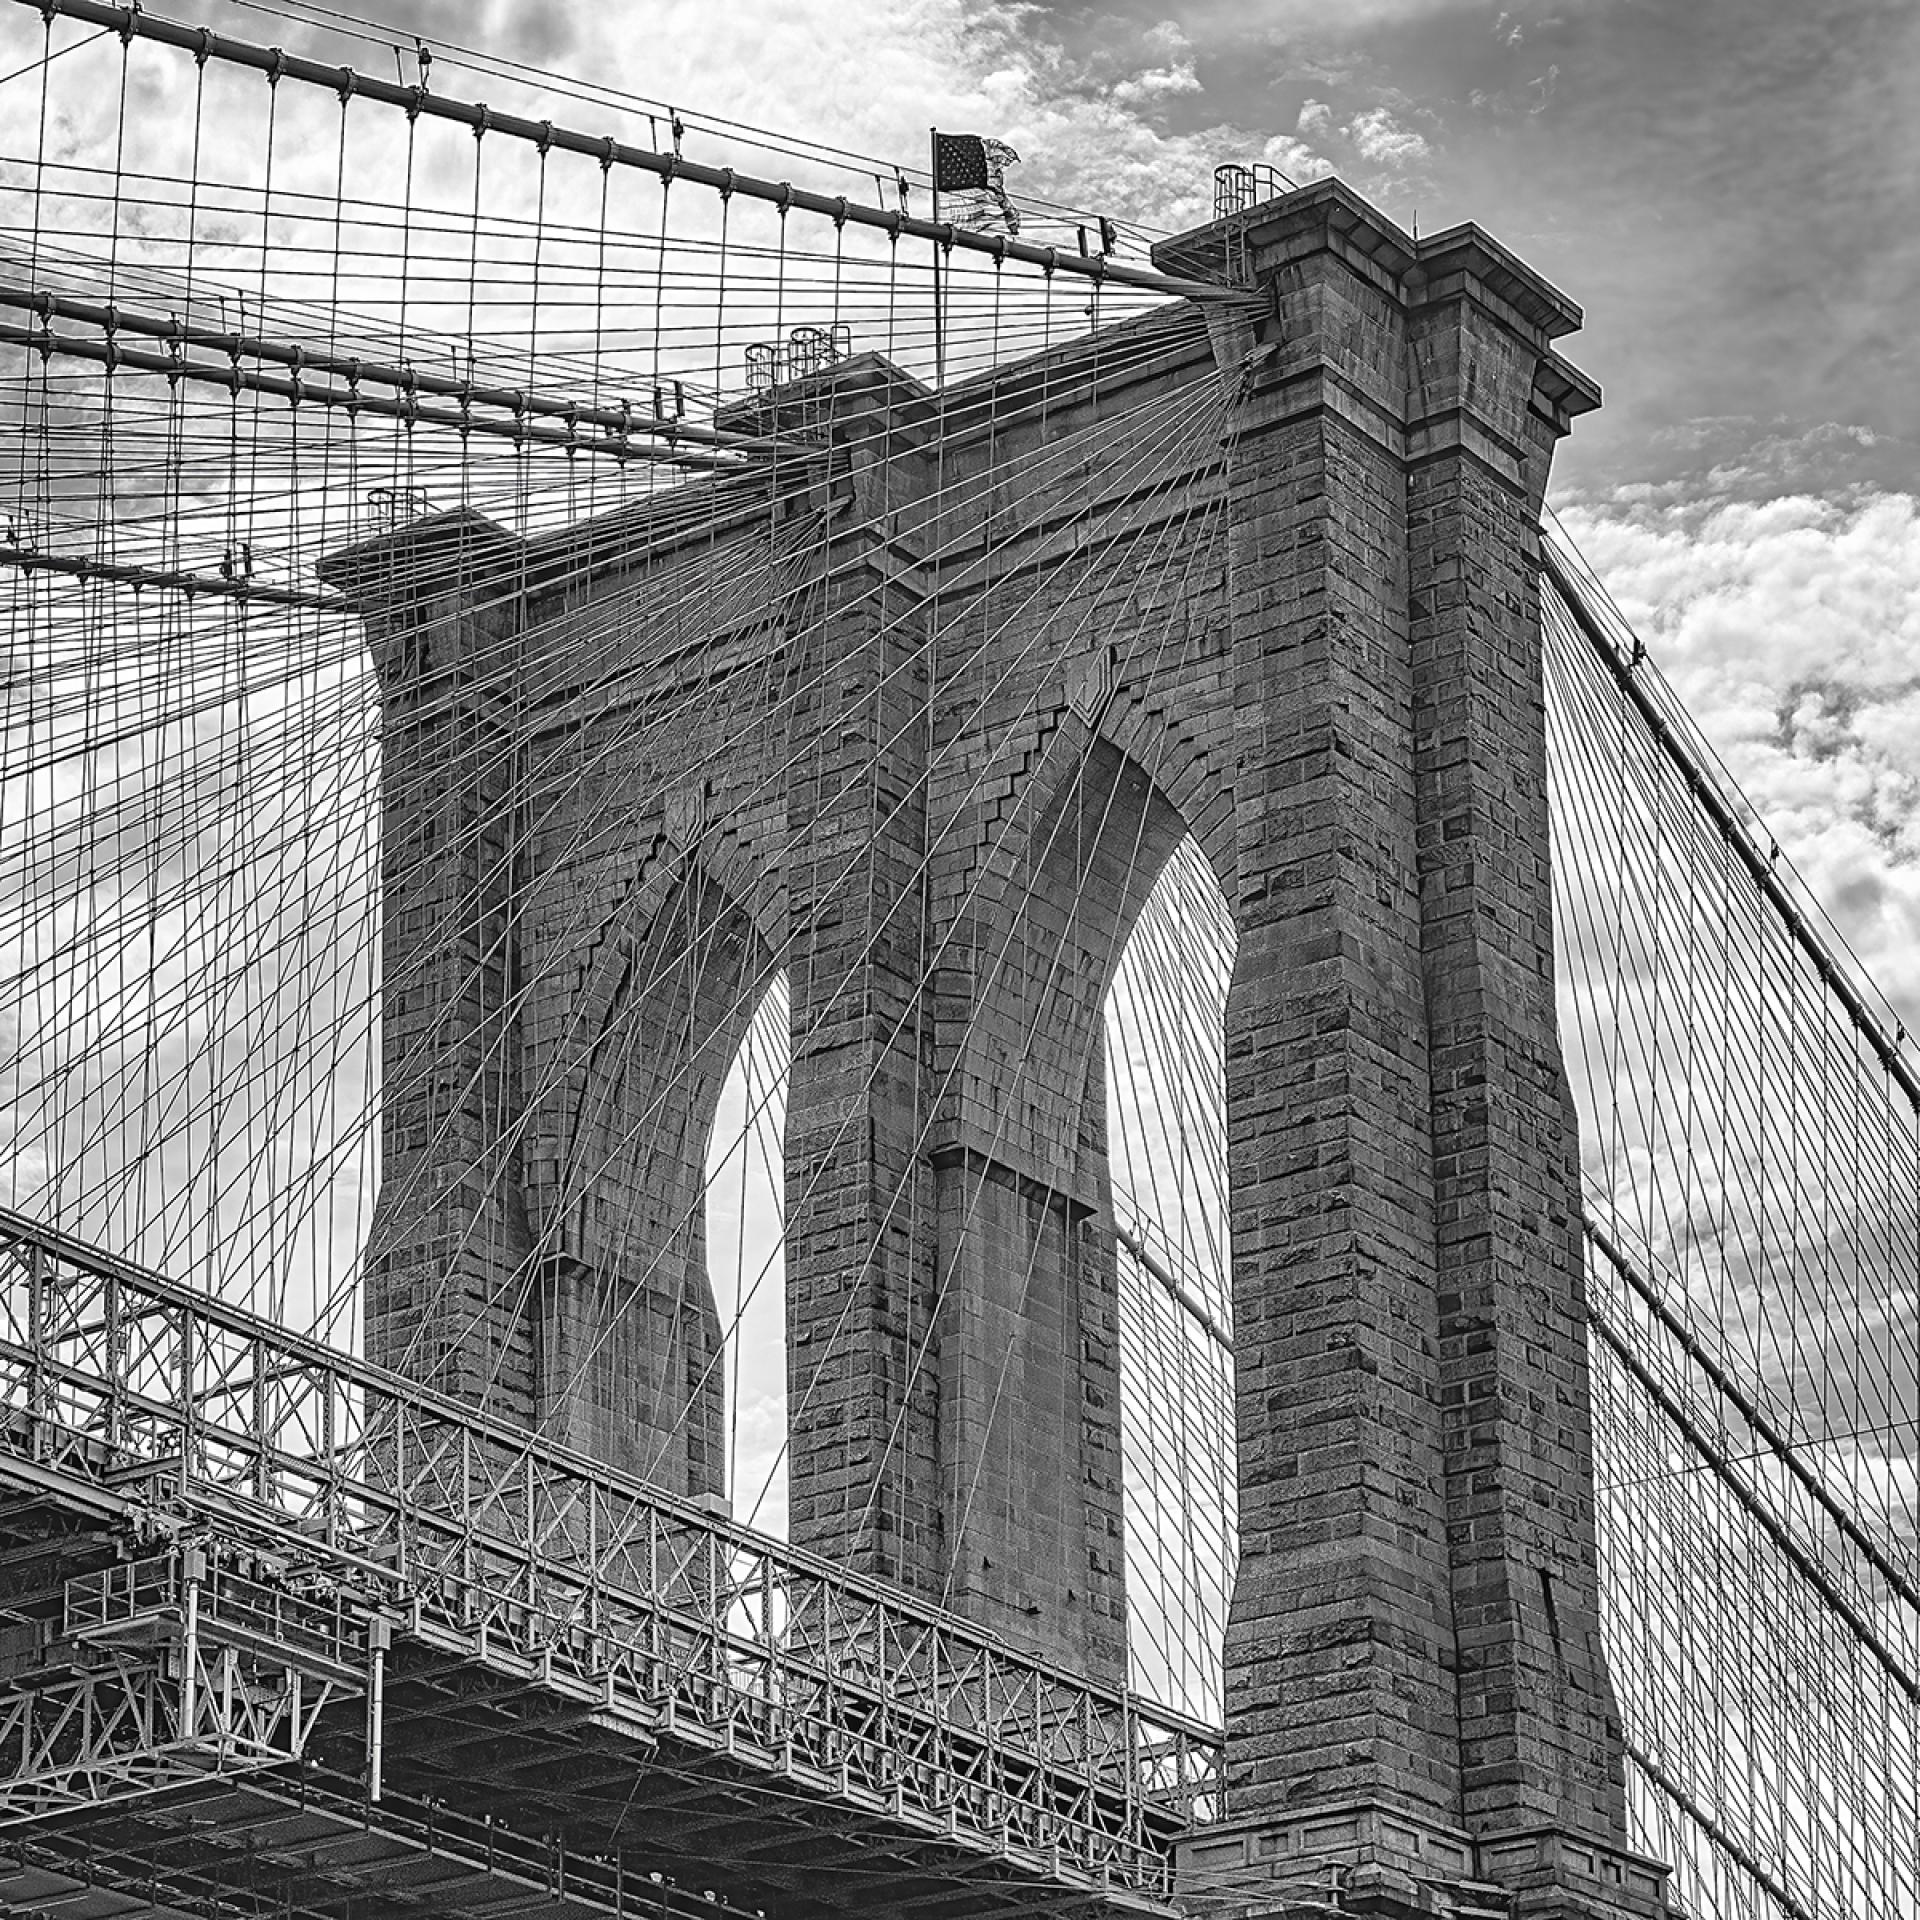 London Photography Awards Winner - Brooklyn Bridge